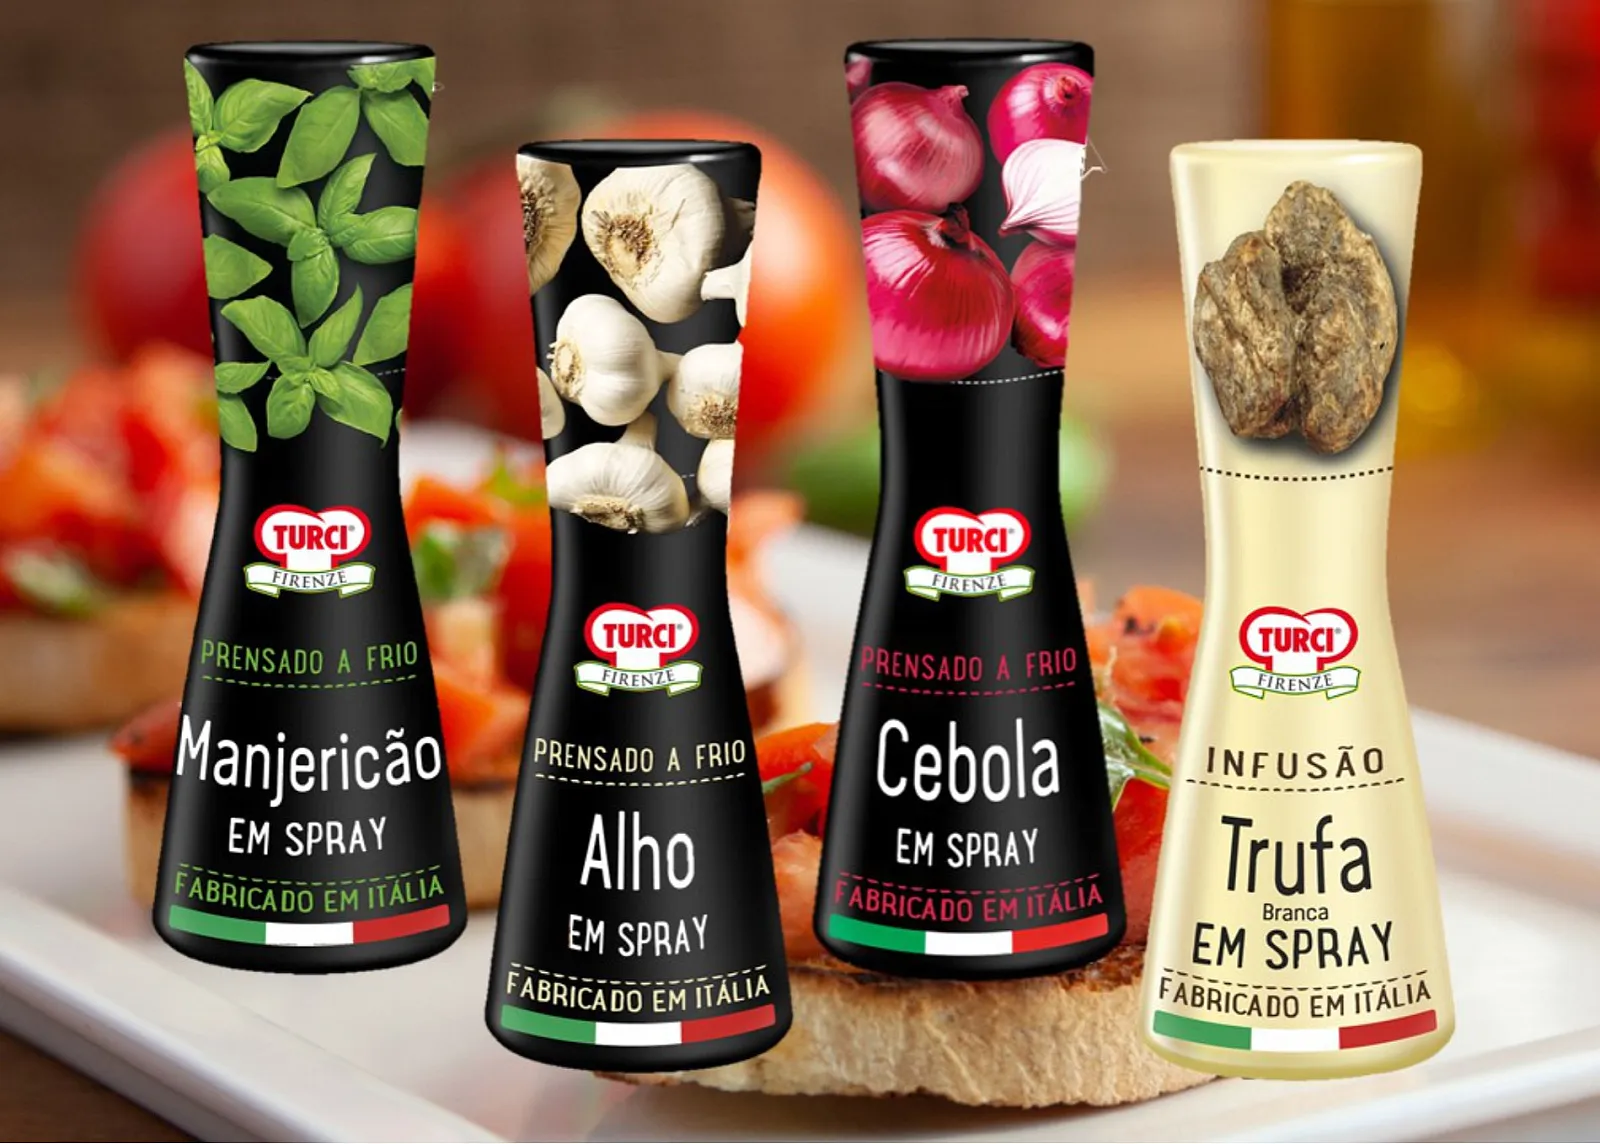 Turci: the spices revolution.